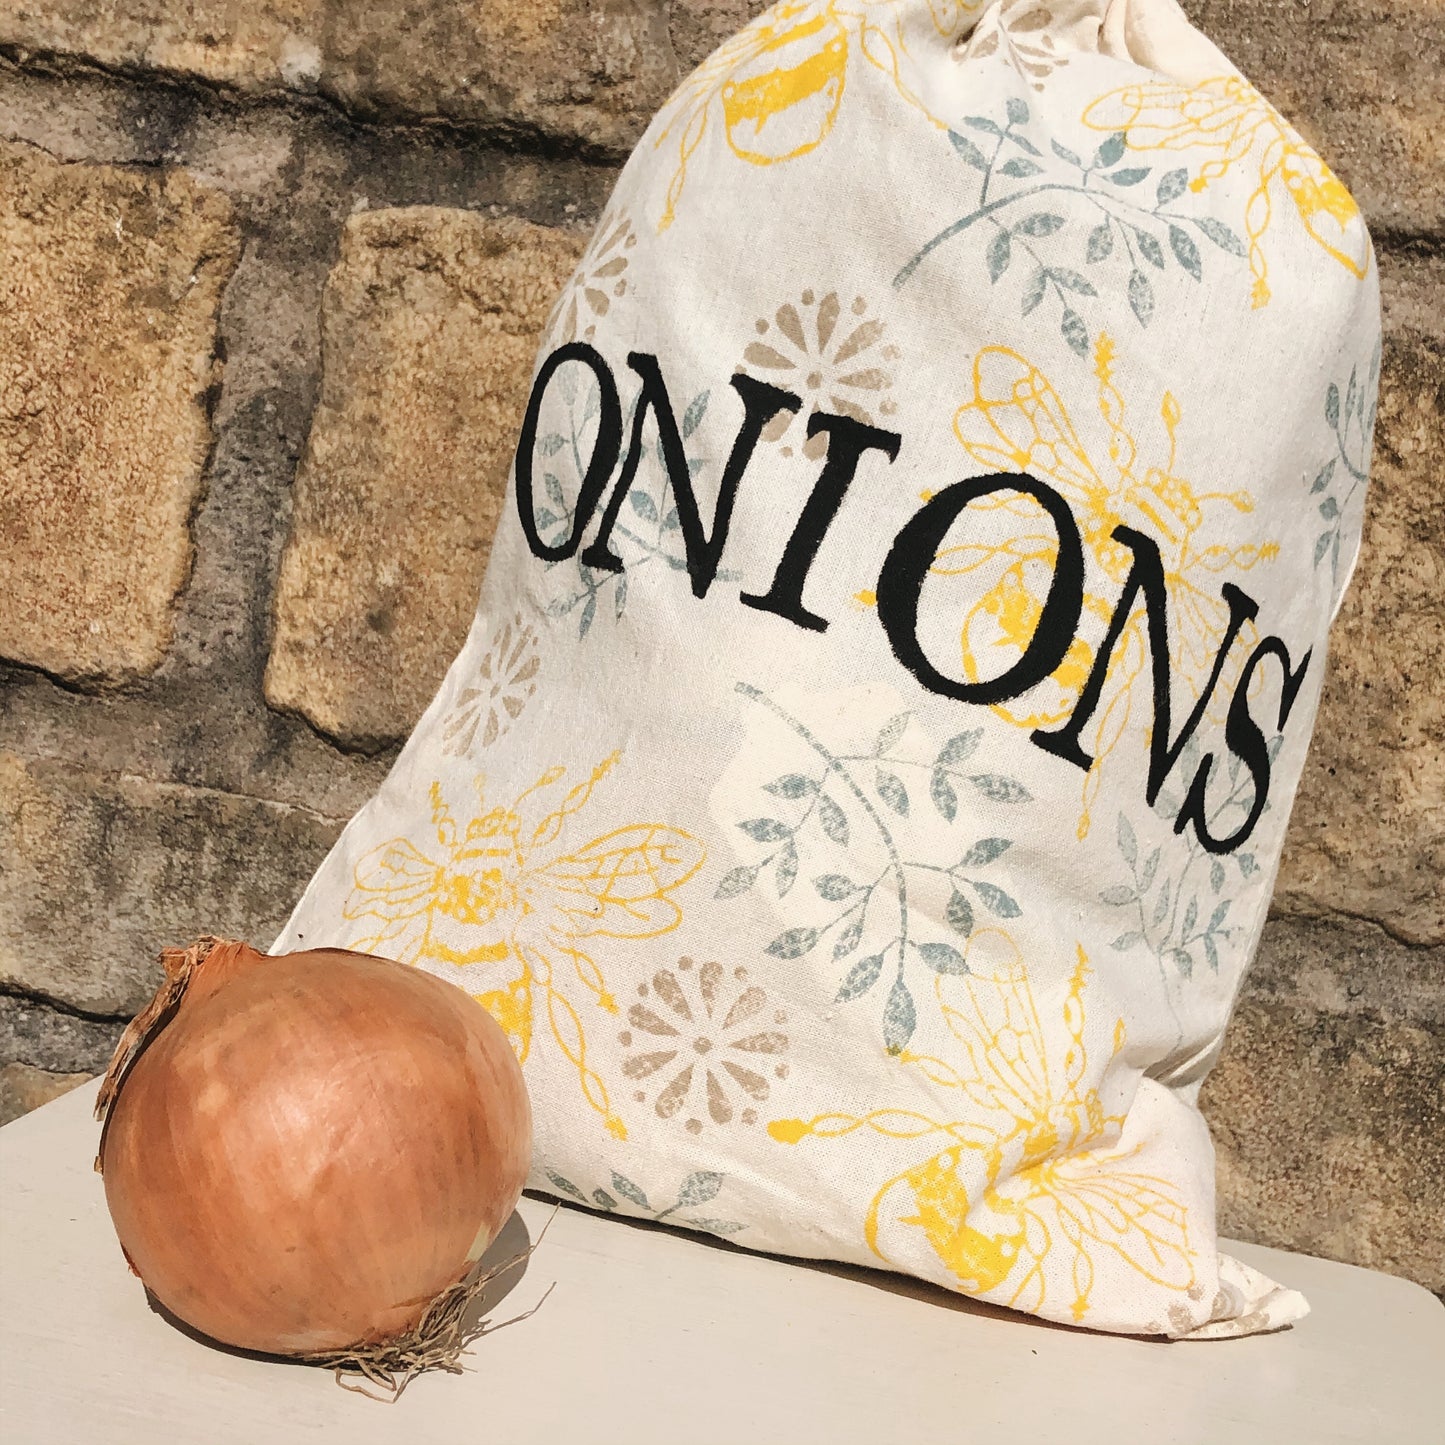 Block Printed Onion and Potato Bags